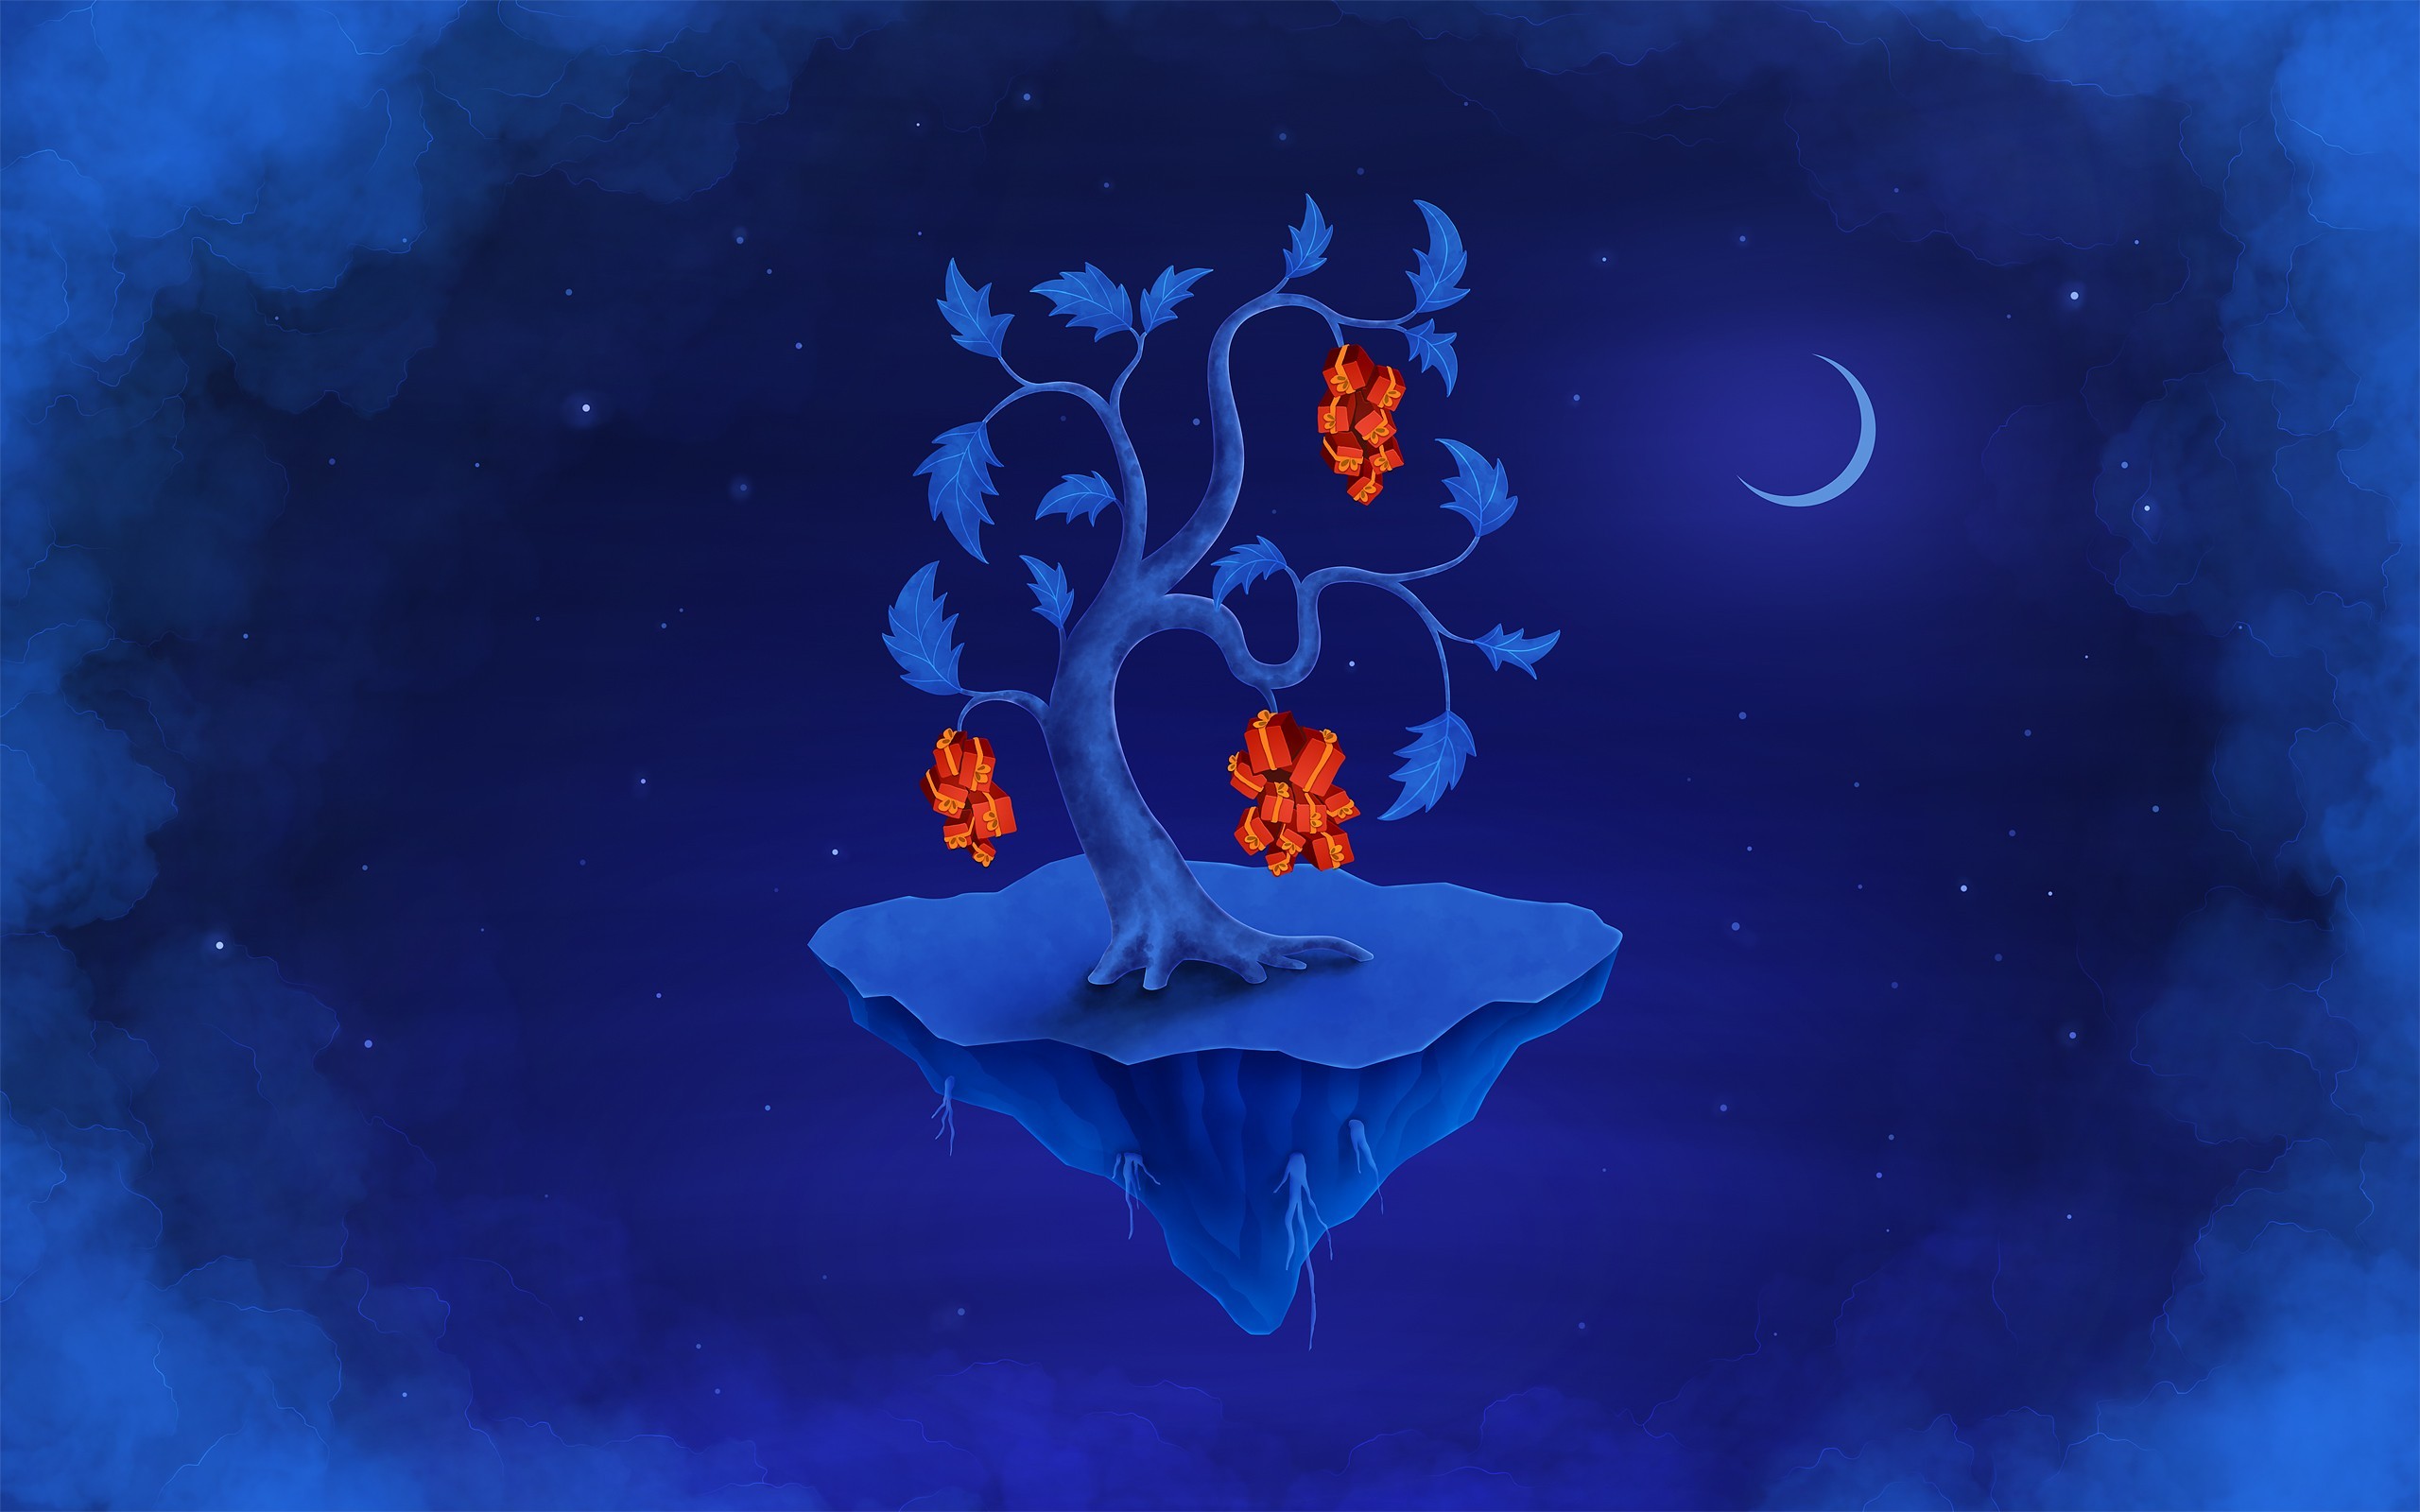 Digital Art Fantasy Art Sky Clouds Floating Island Vladstudio Trees Moon Leaves Christmas Stars Pres 2560x1600